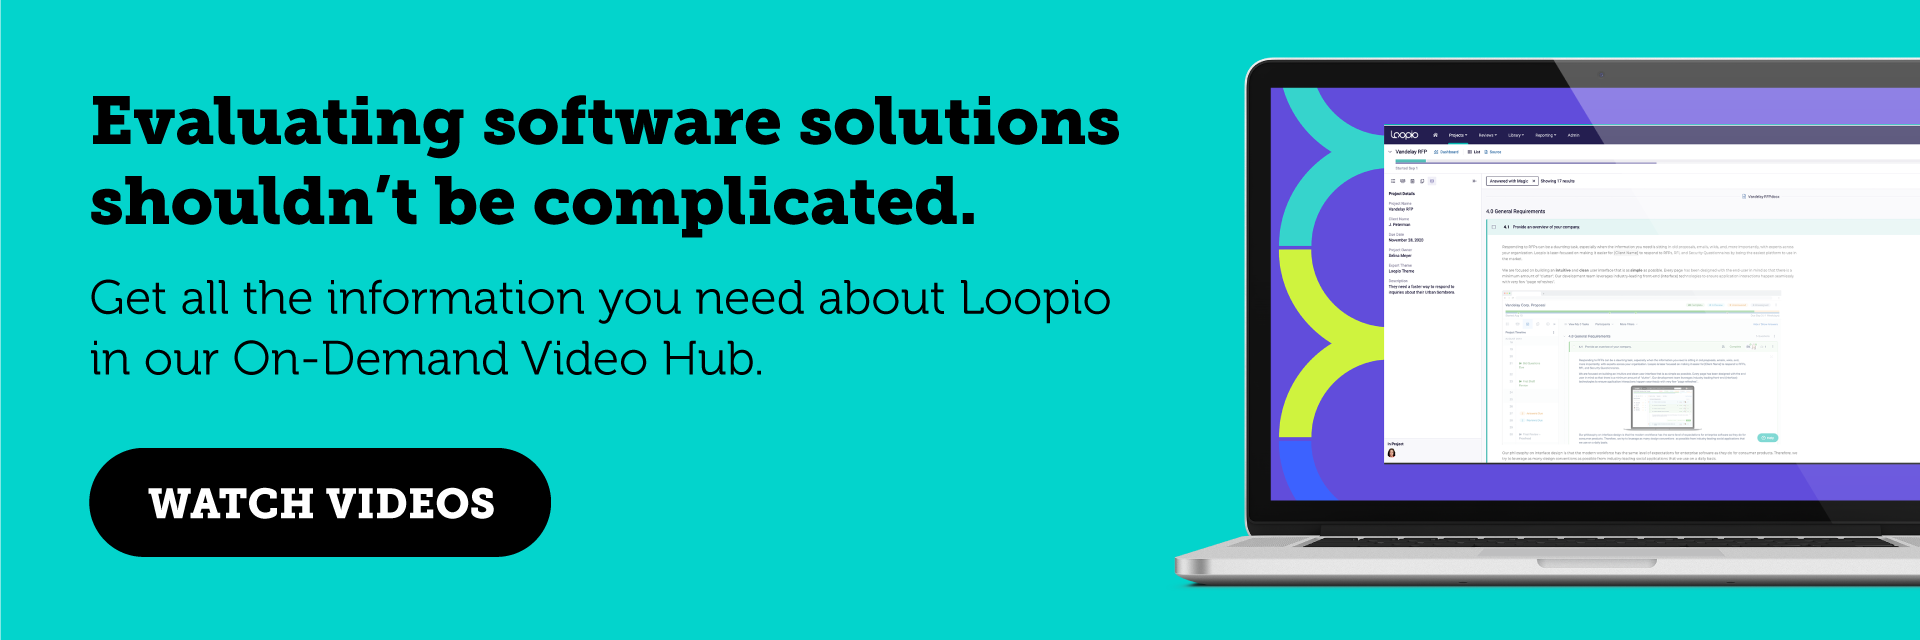 Watch on demand videos about Loopio's software